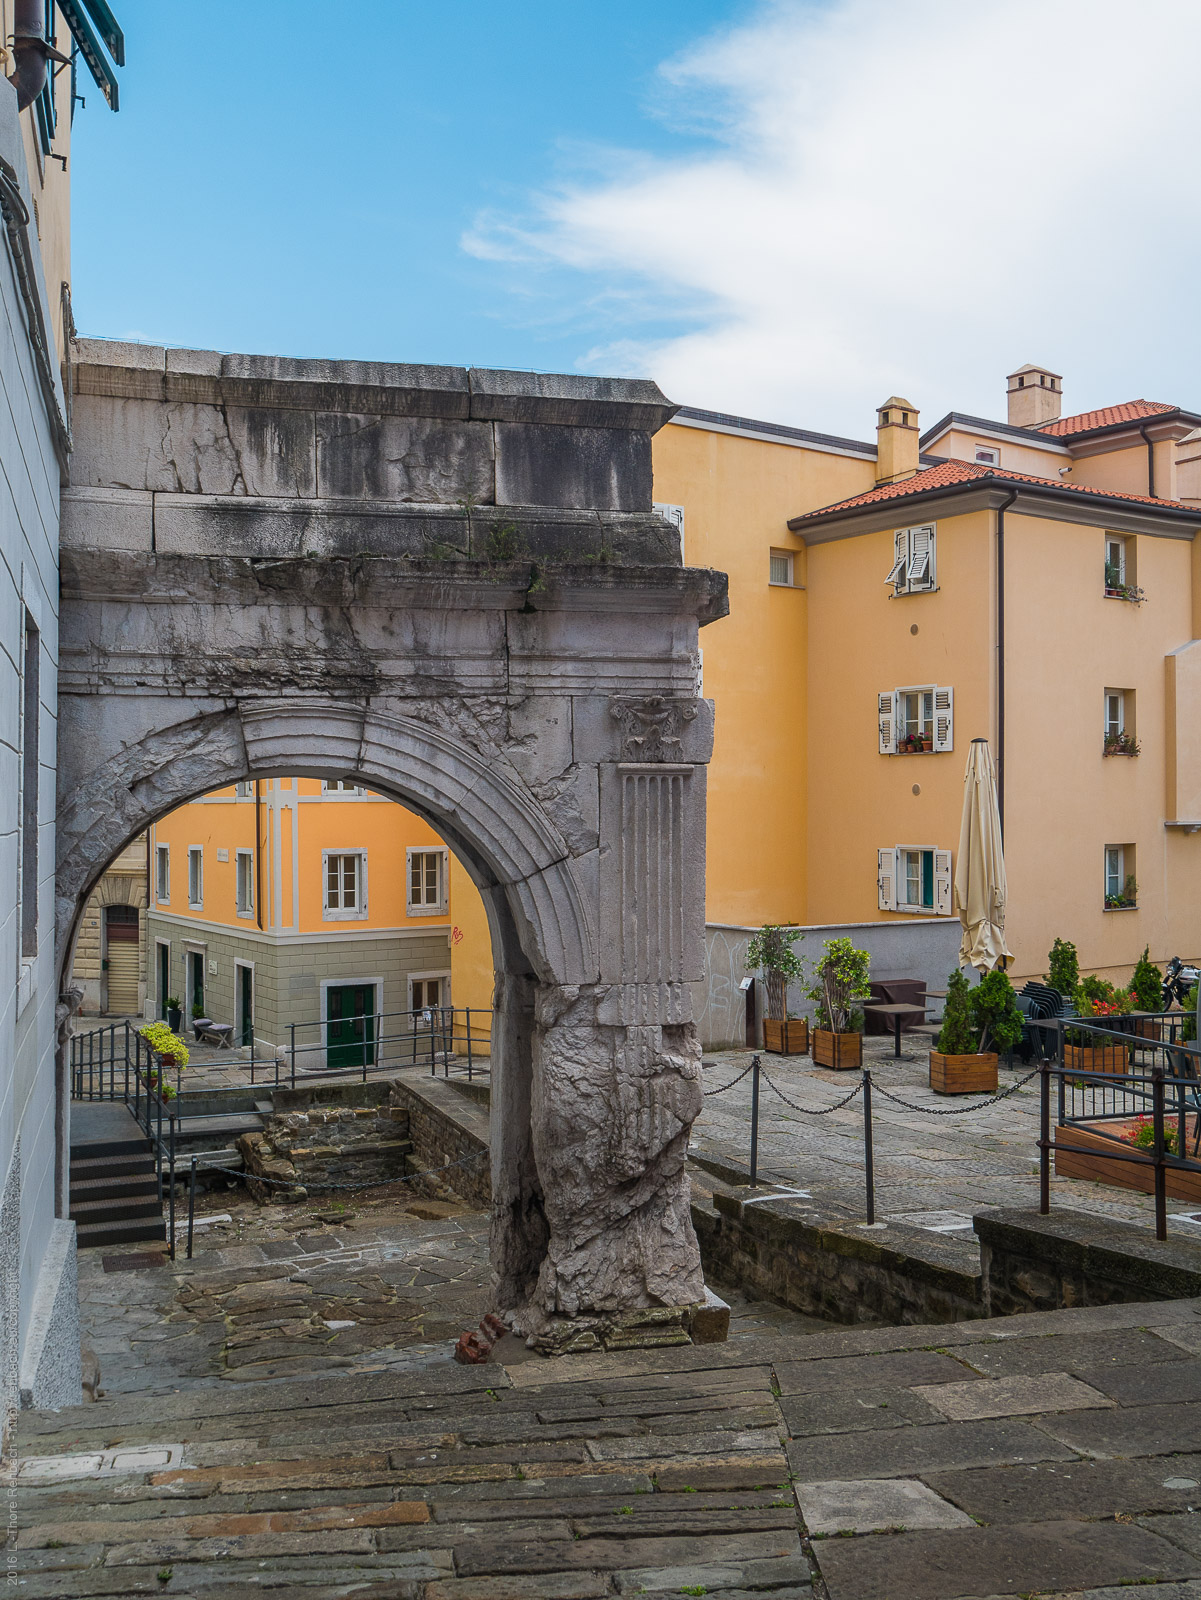 Arco di Ricardo in Trieste